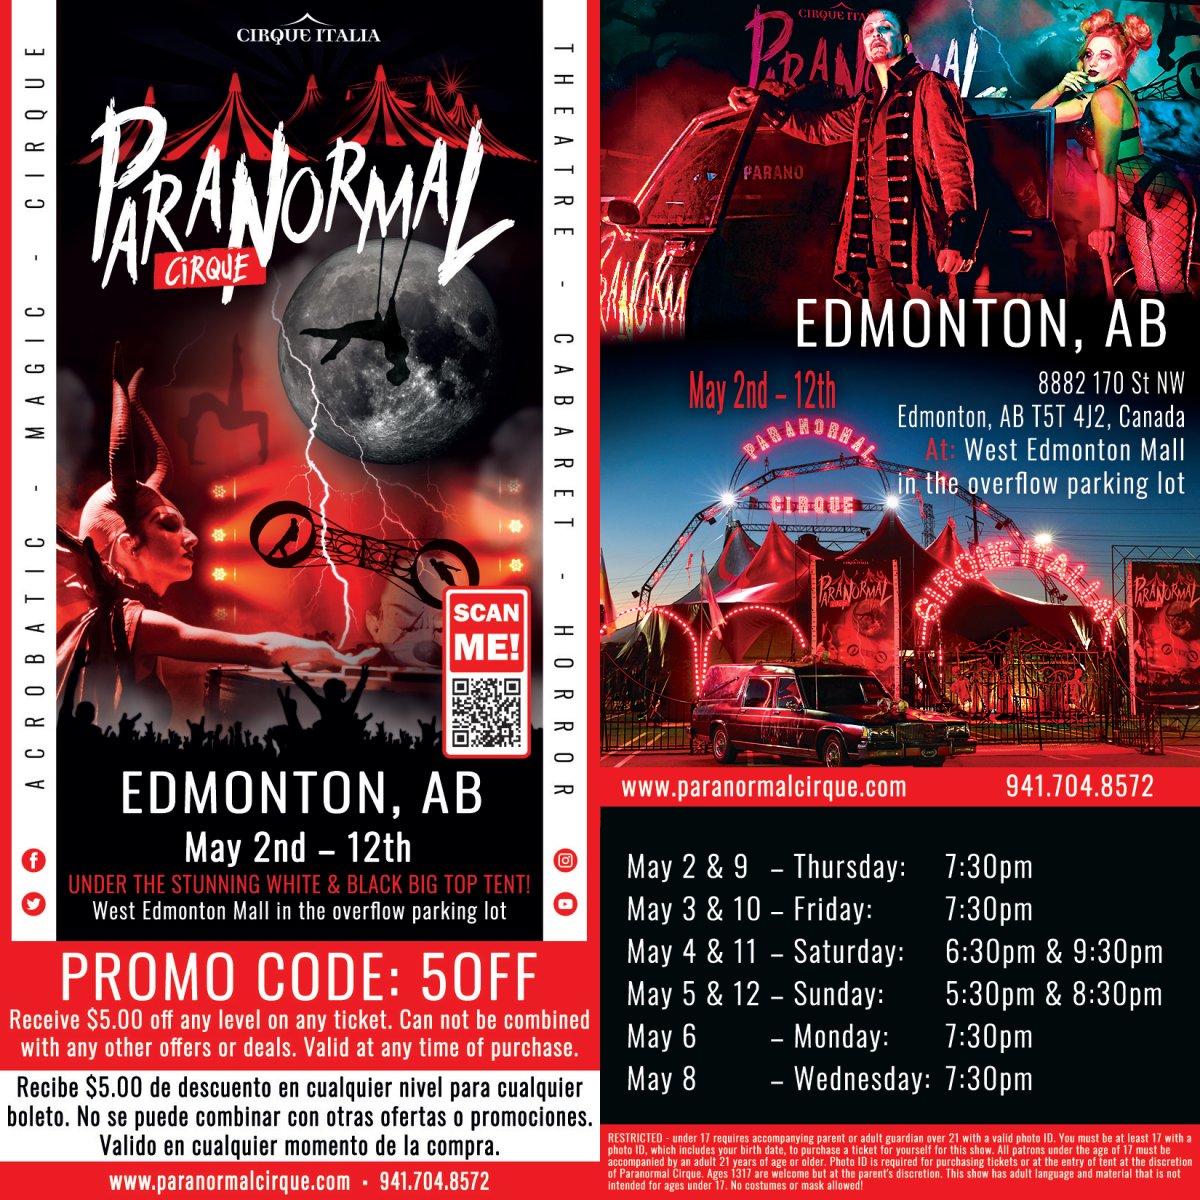 Paranormal Cirque in Edmonton, AB - image